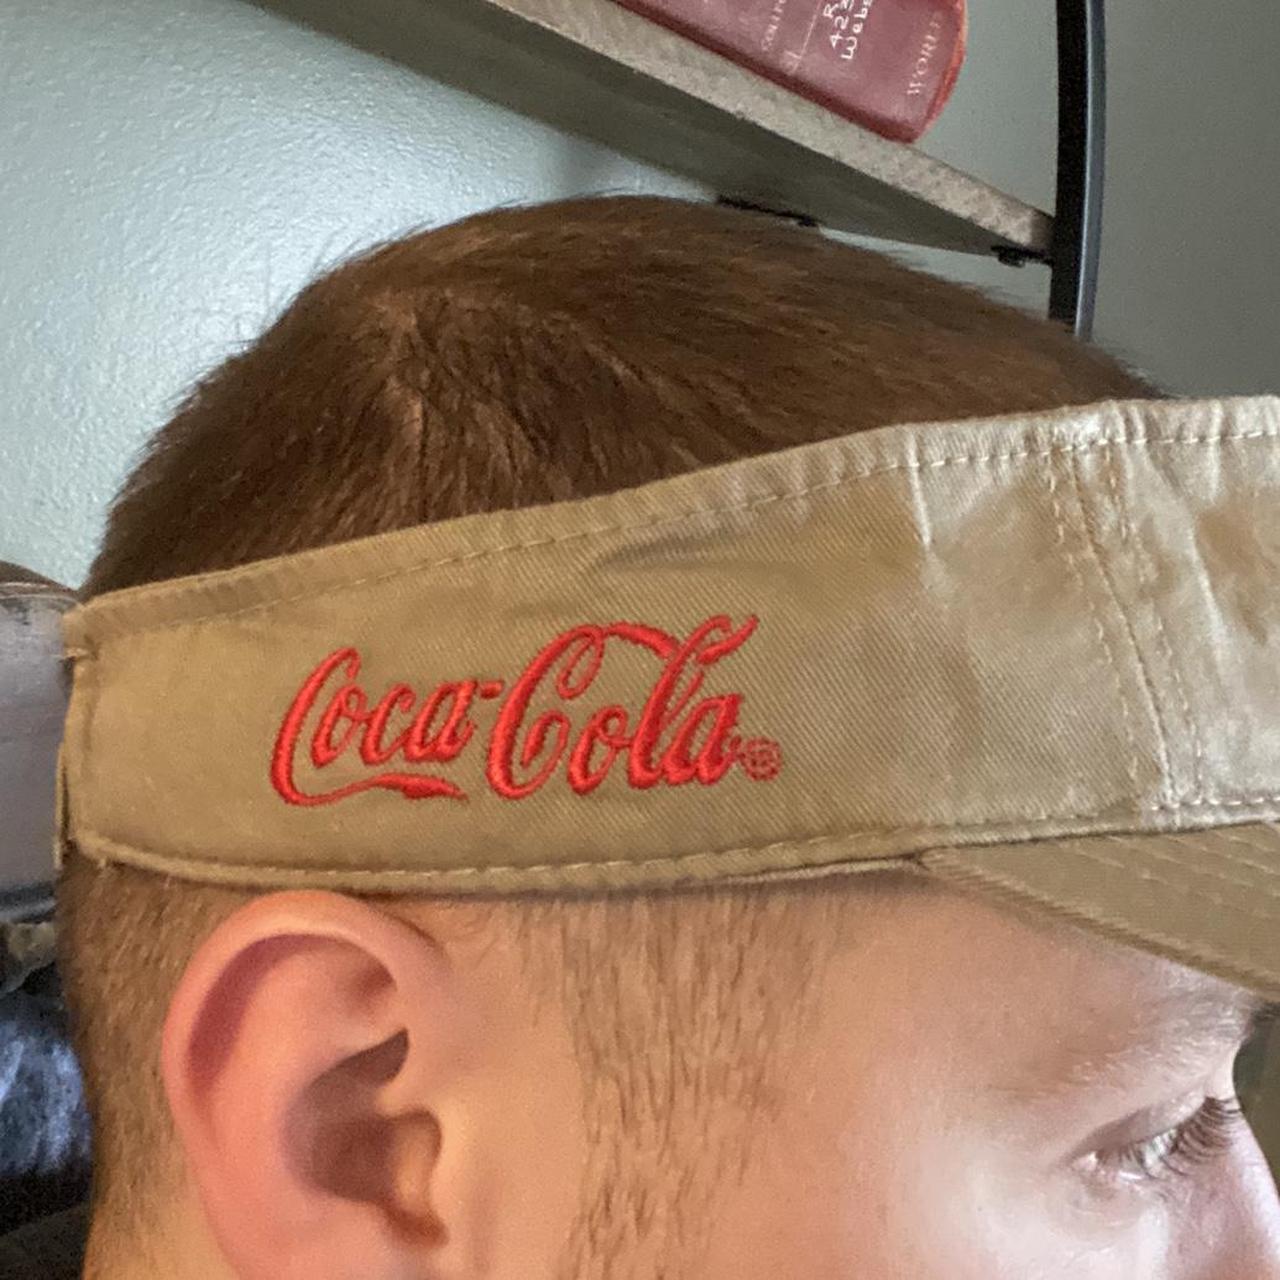 Coca-Cola Men's Hat (2)